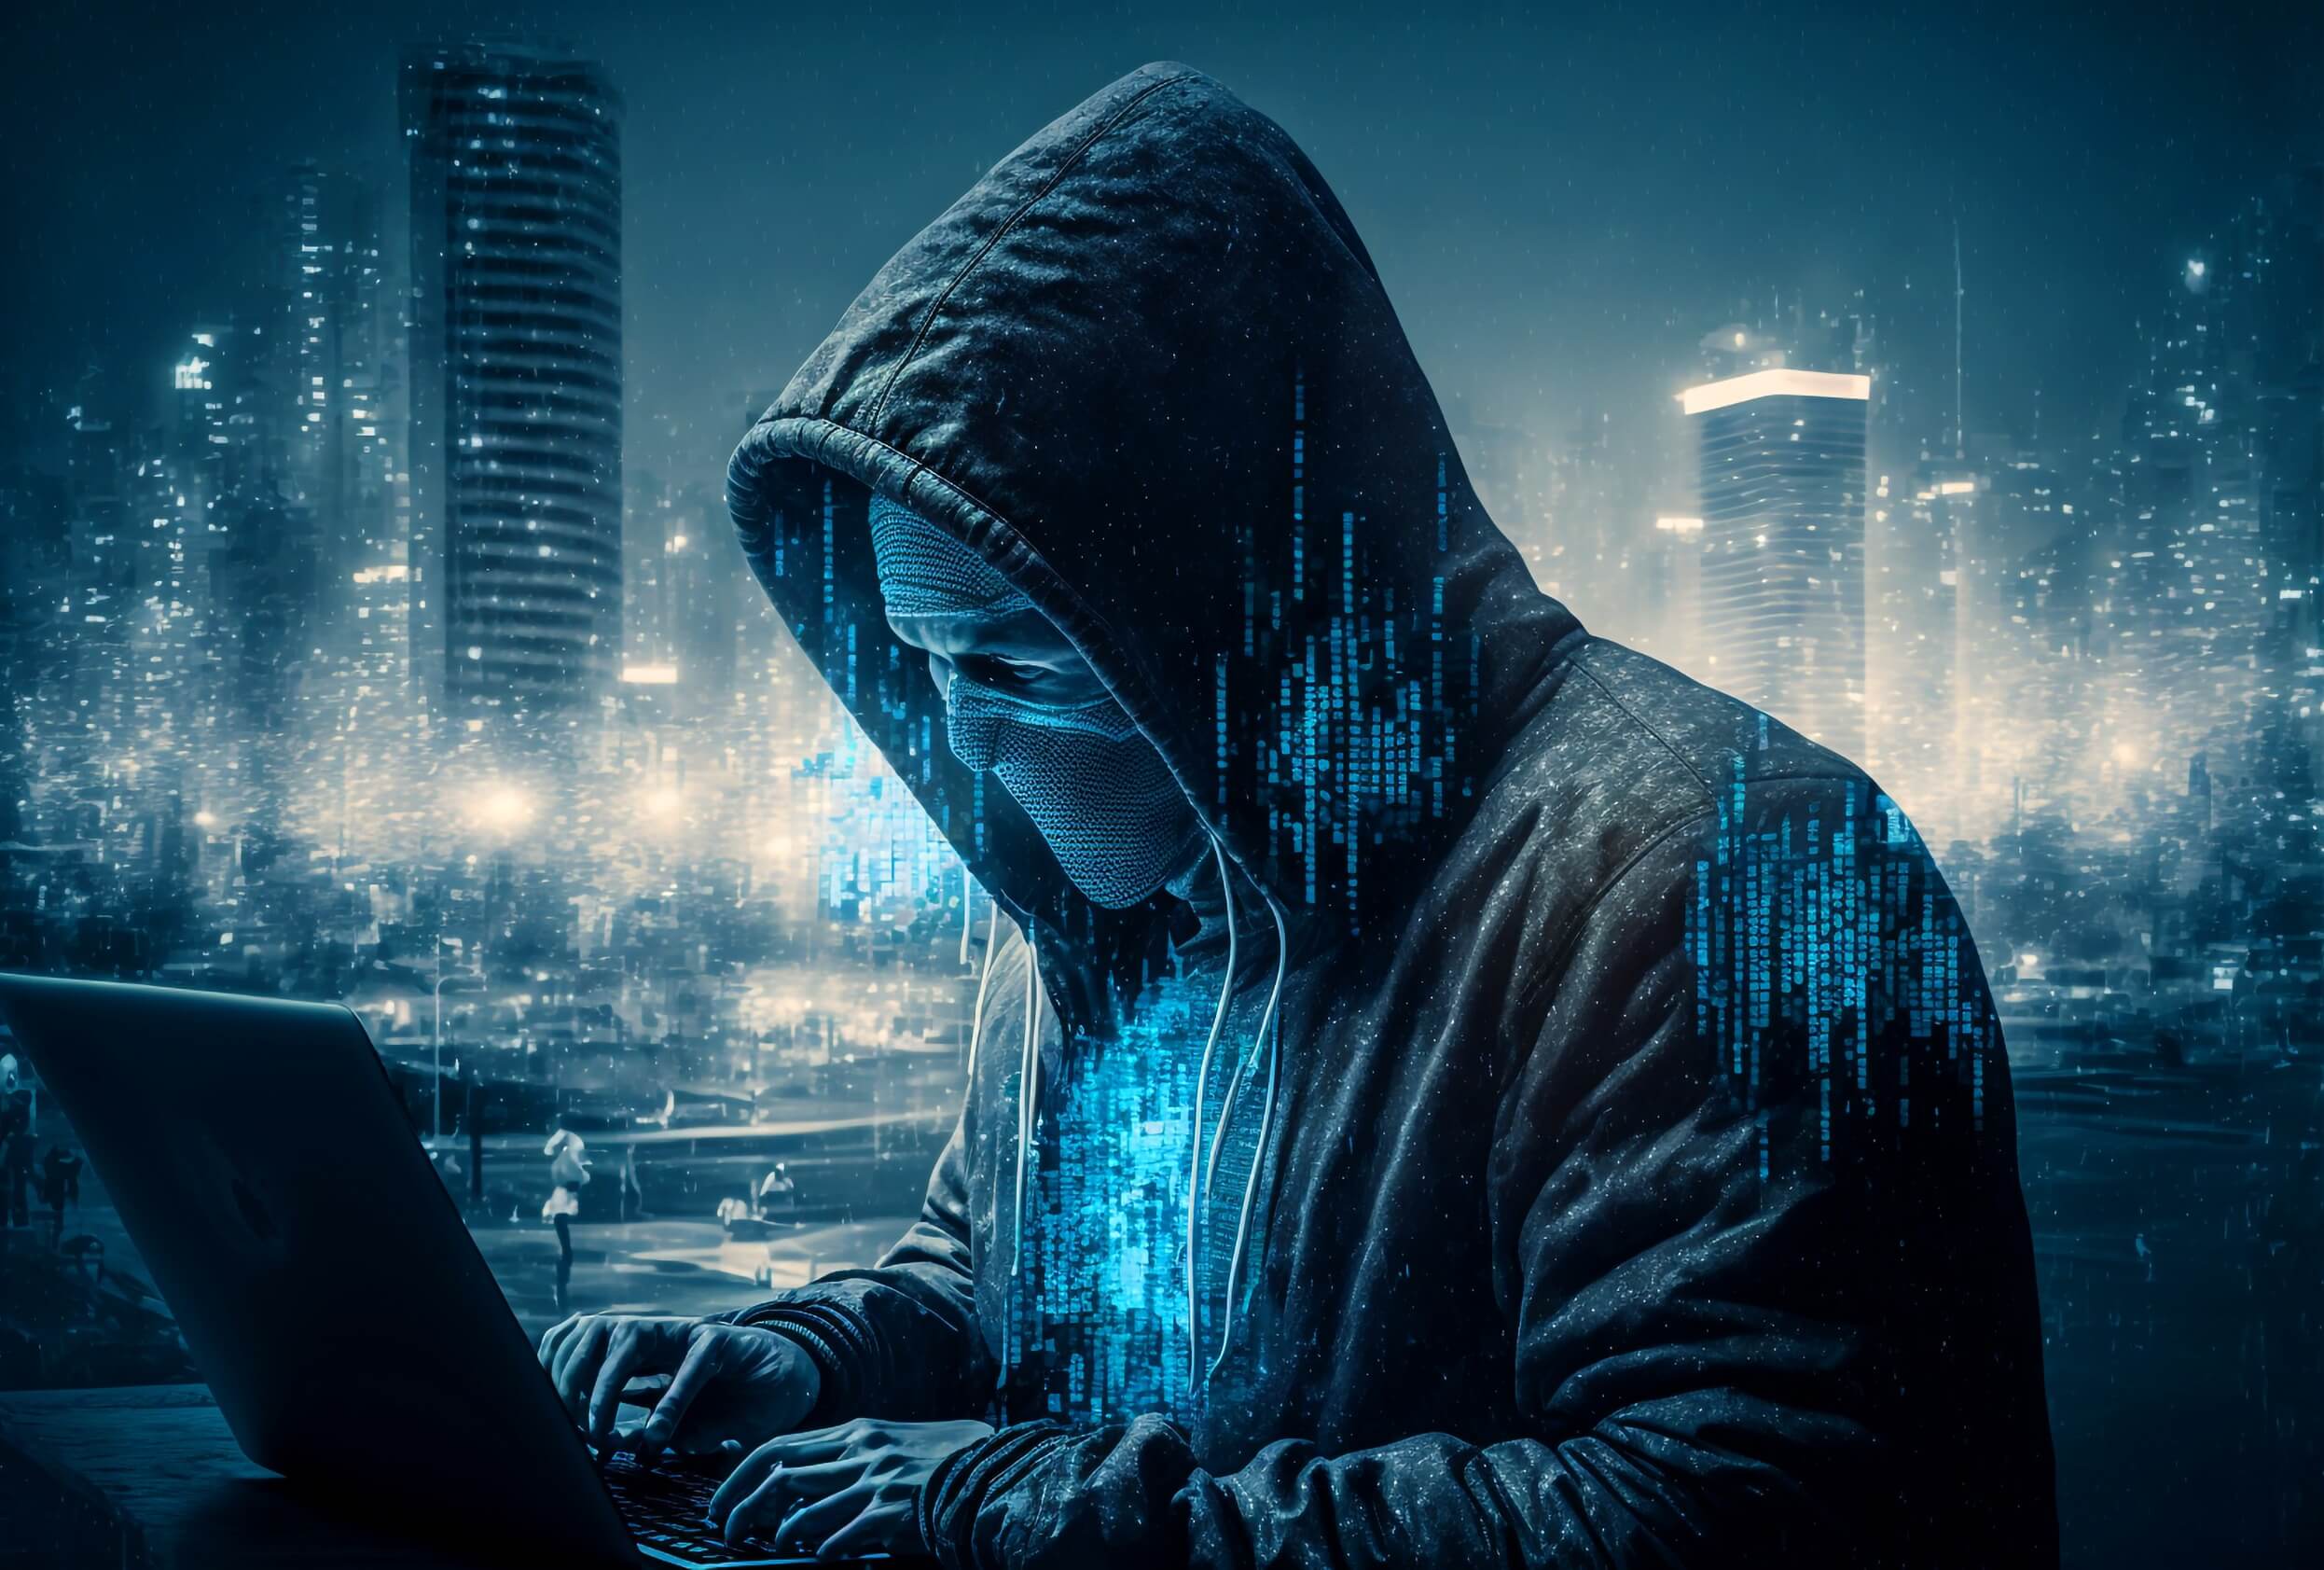 STALKER 2 game developer hacked by Russian hacktivists, data stolen